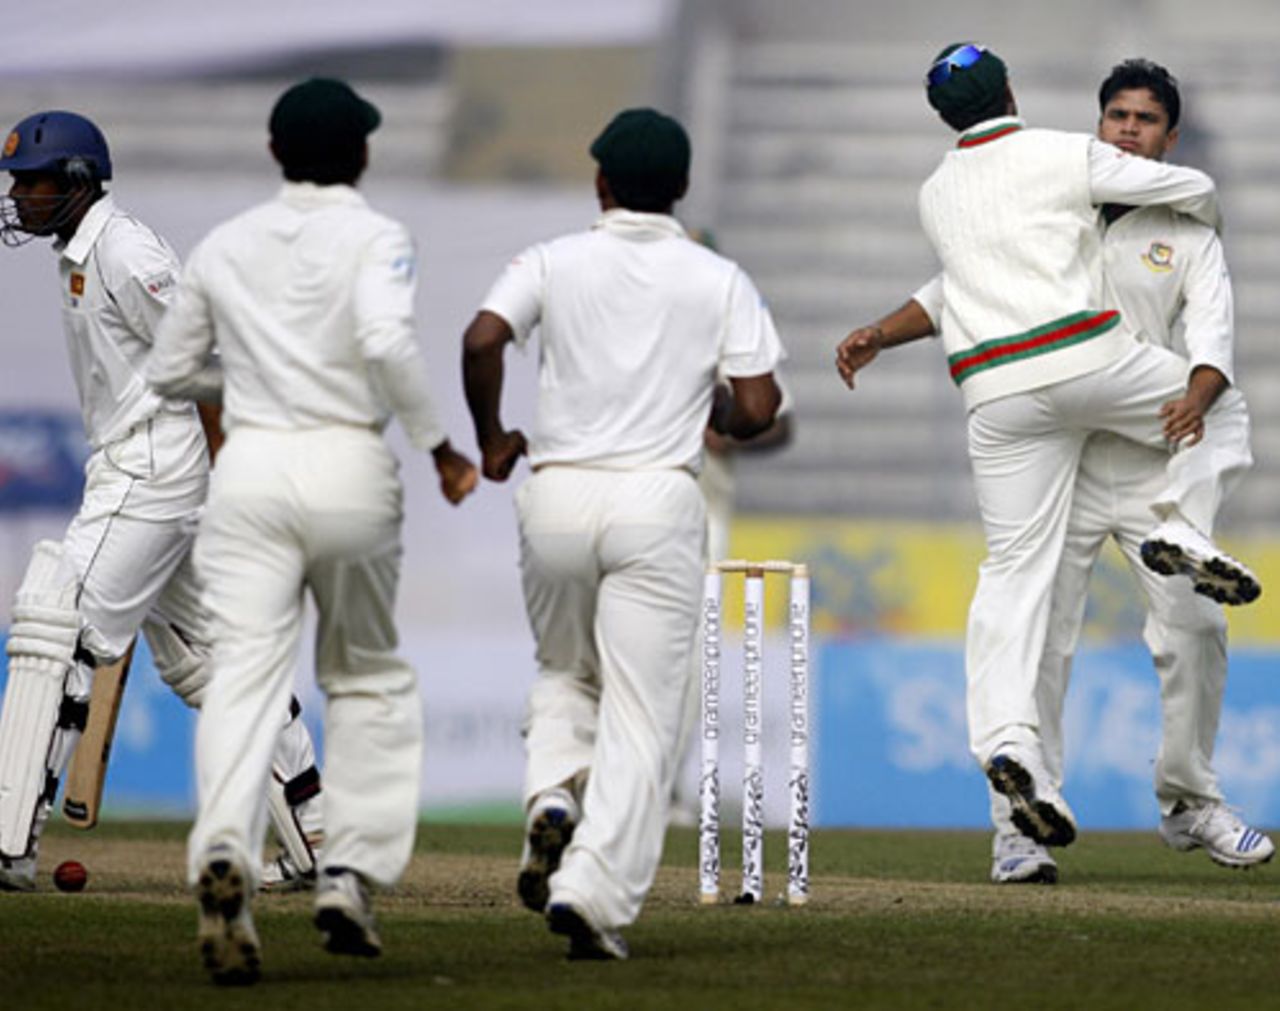 Bangladesh players rush in towards Mashrafe Mortaza after he dismissed Malinda Warnapura, Bangladesh v Sri Lanka, 1st Test, Mirpur, 1st day, December 26, 2008